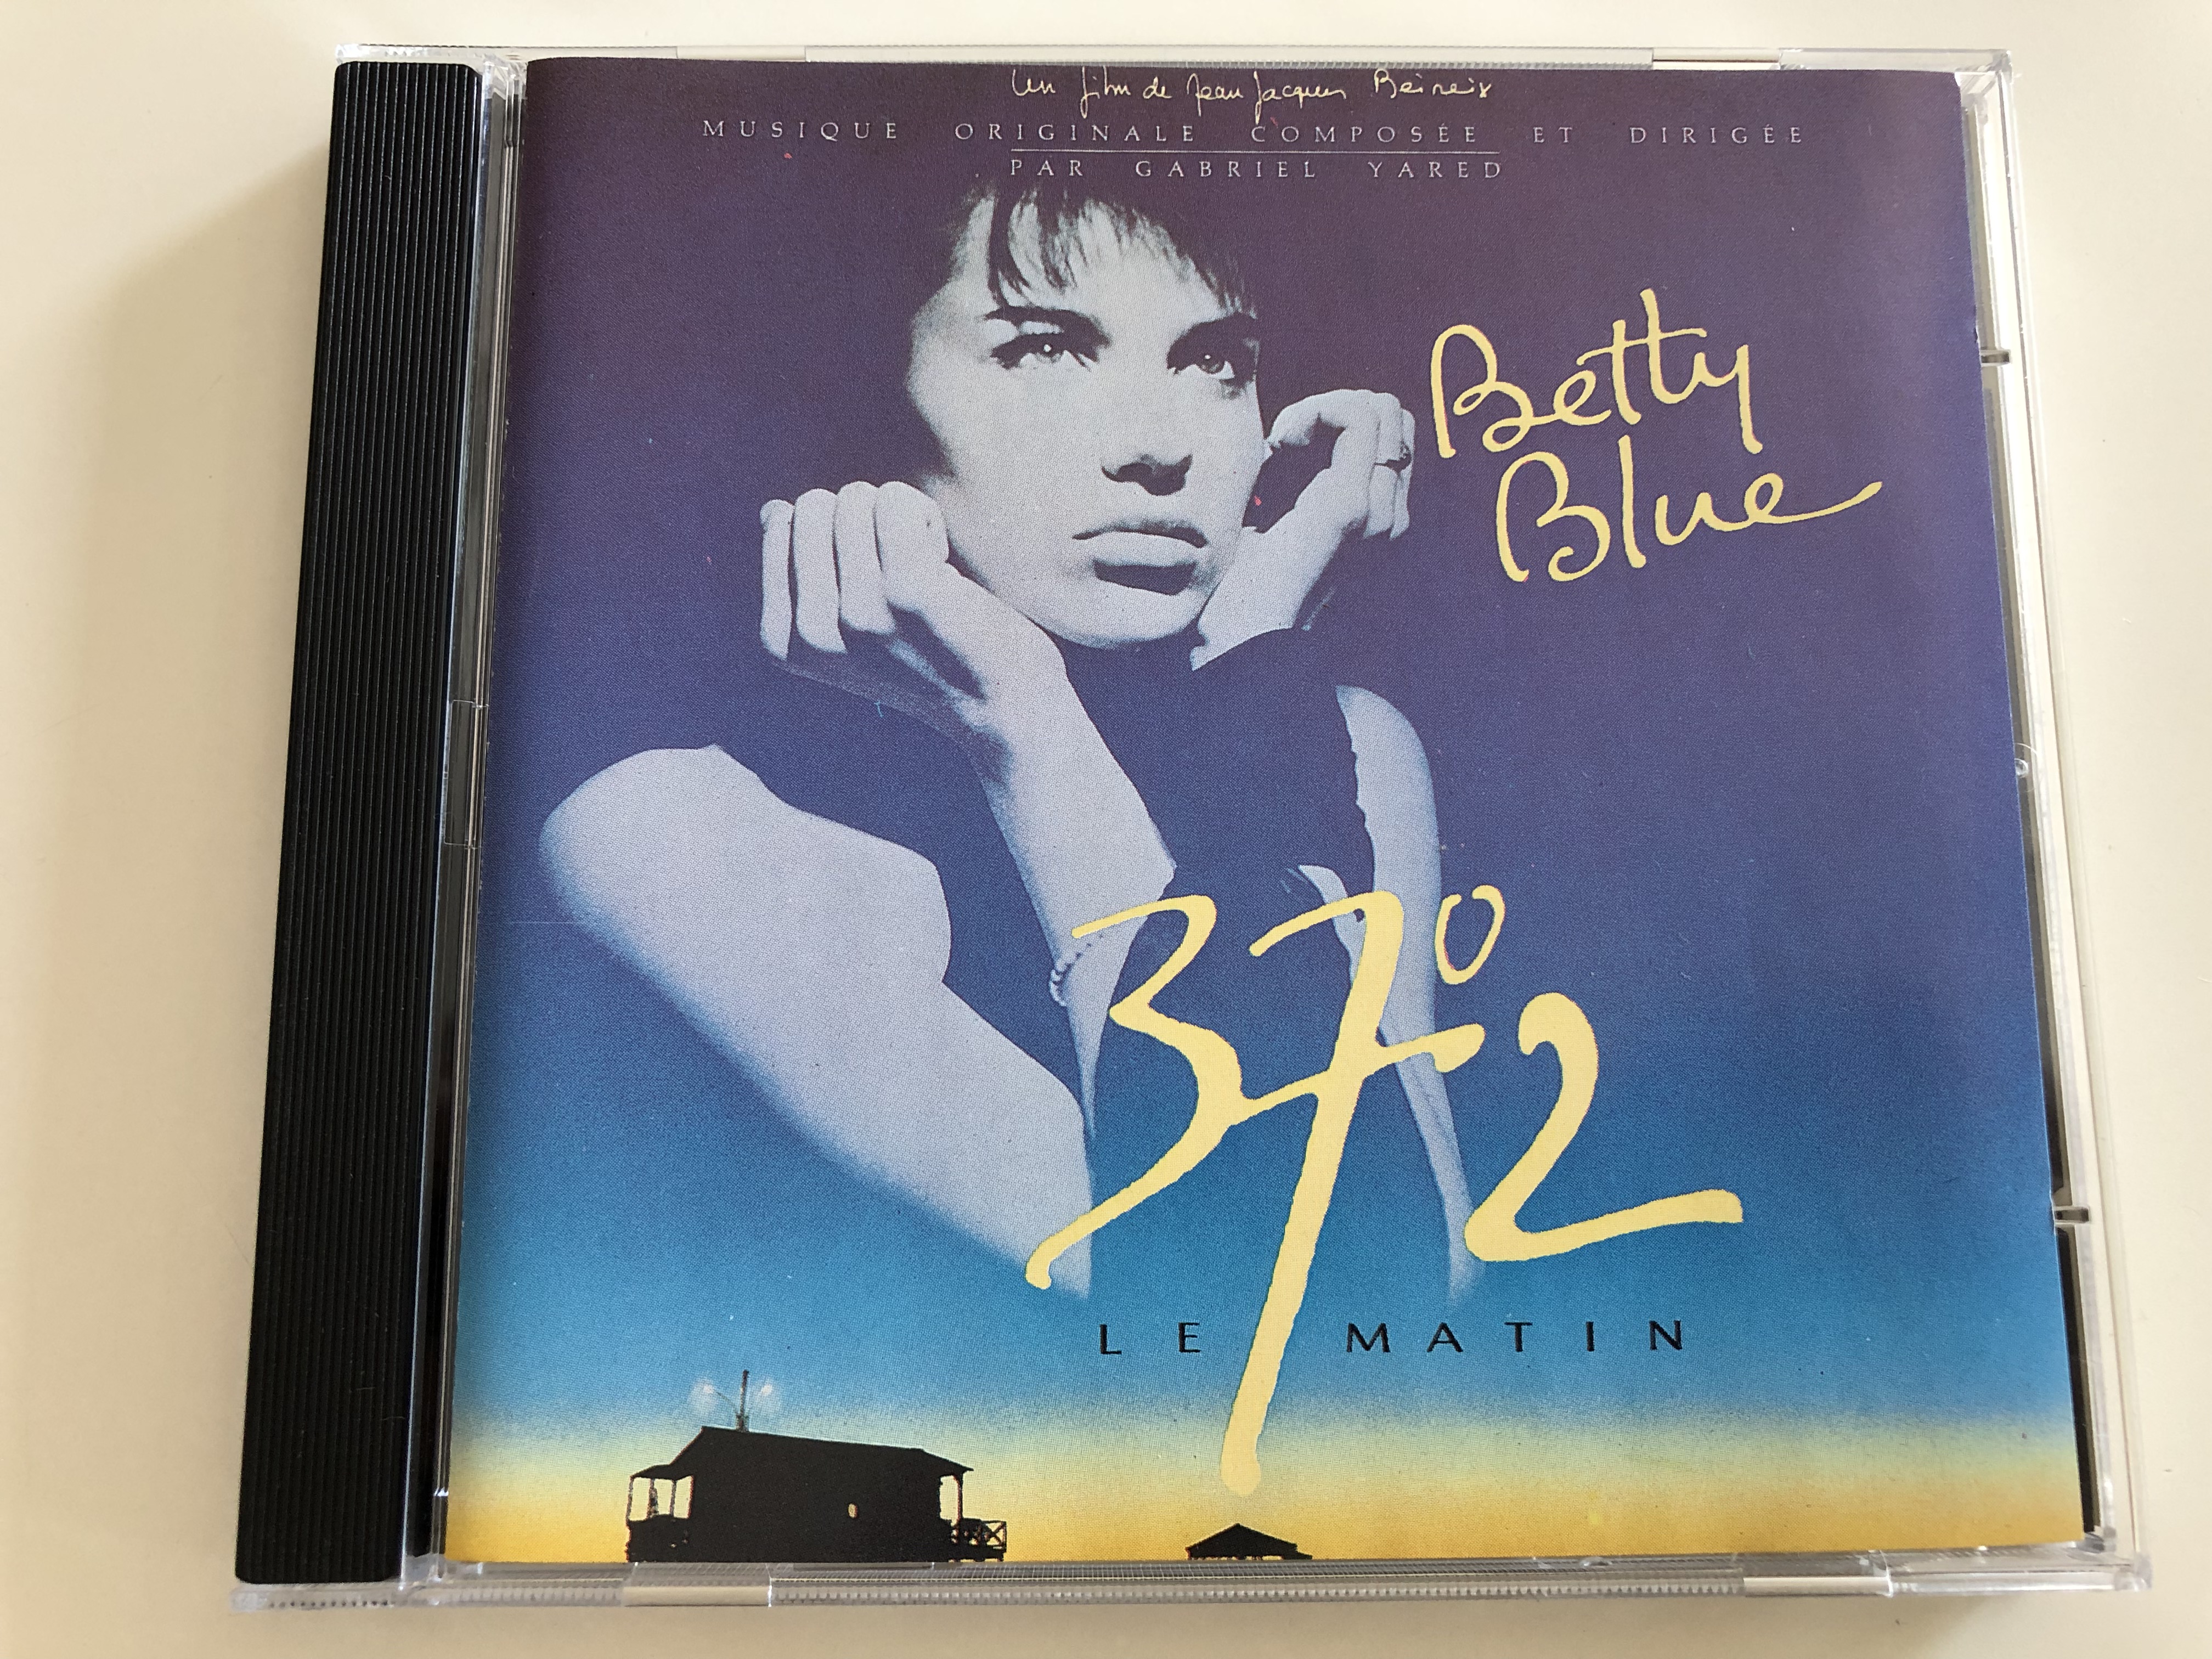 gabriel-yared-betty-blue-37-2-le-matin-original-soundtrack-audio-cd-1986-cdv-2396-bebop-editions-virgin-records-1-.jpg